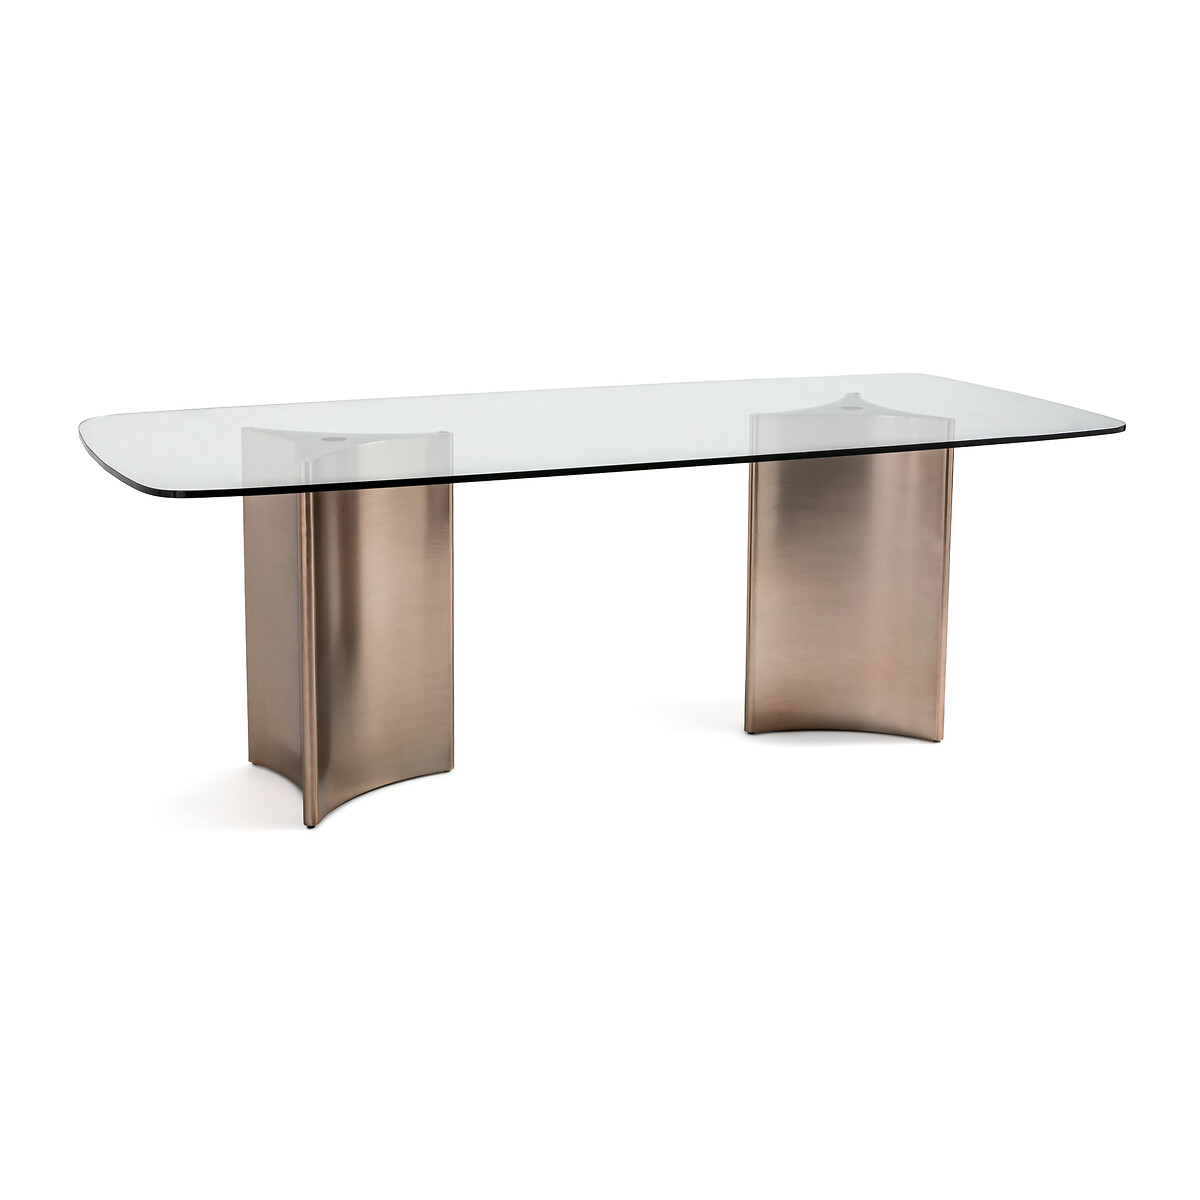 Стол из металластекла на 8 персон Atizar на 8 персон каштановый стол из мрамора buondi дизайн э галлины на 8 персон белый